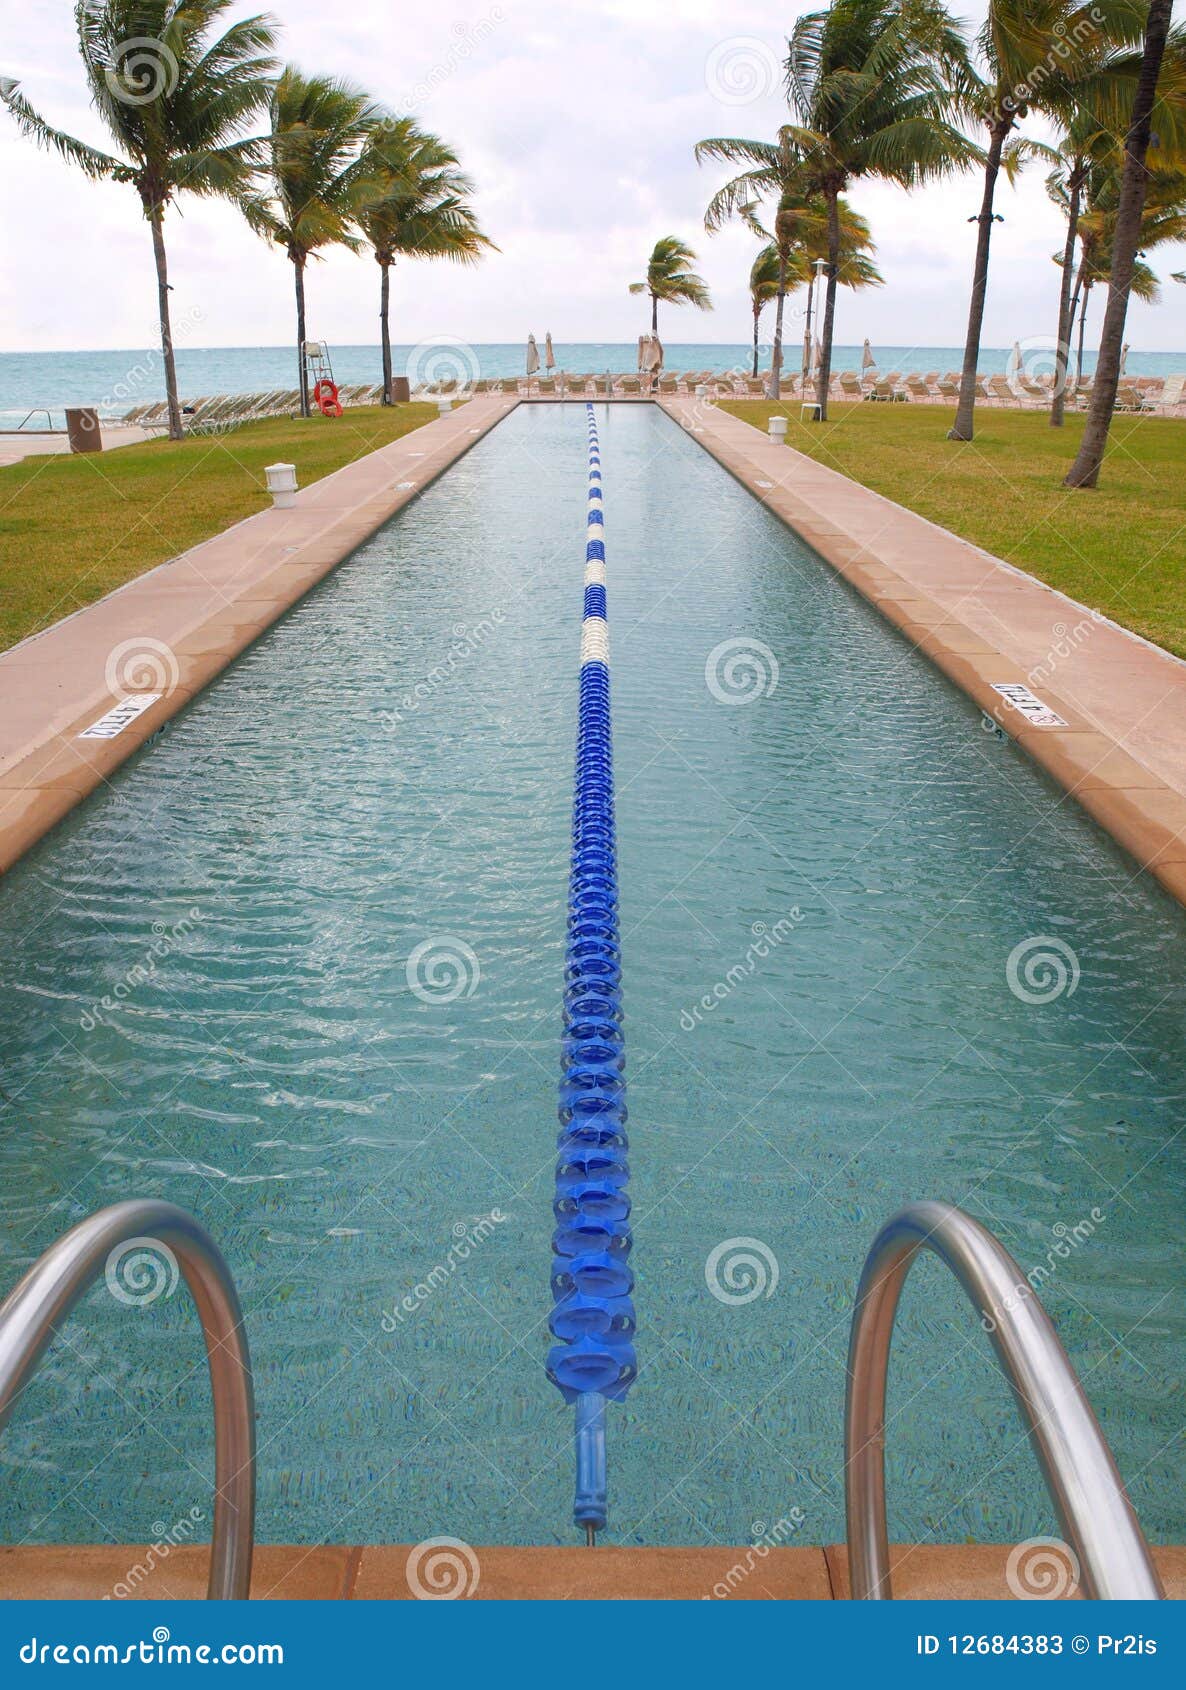 Swimming Lap Pool On The Beach Stock Photos - Image: 12684383